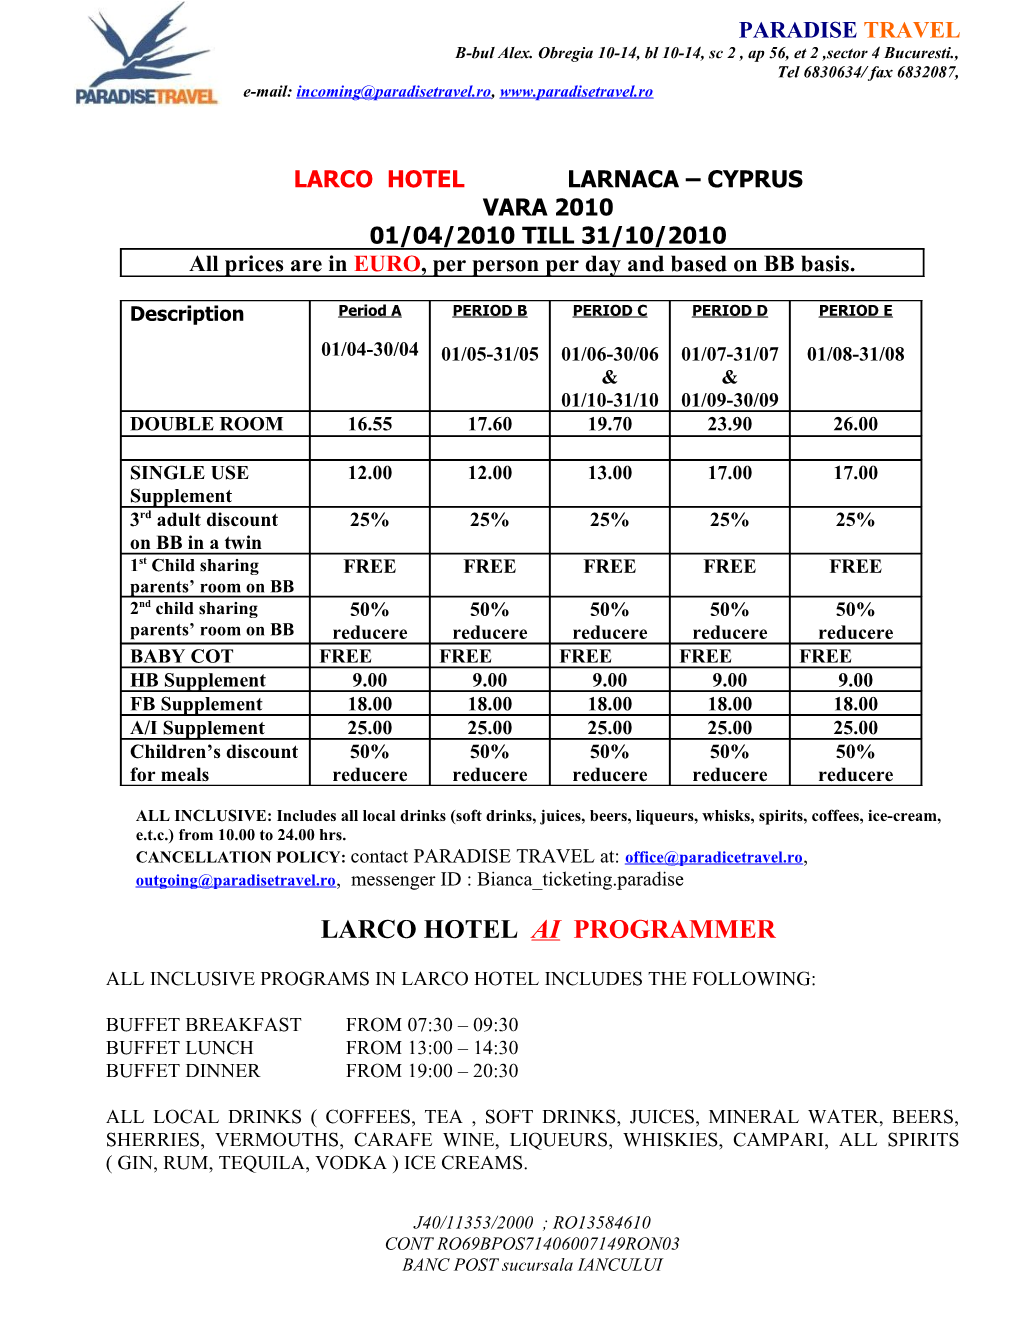 Larco Hotel Larnaca Cyprus